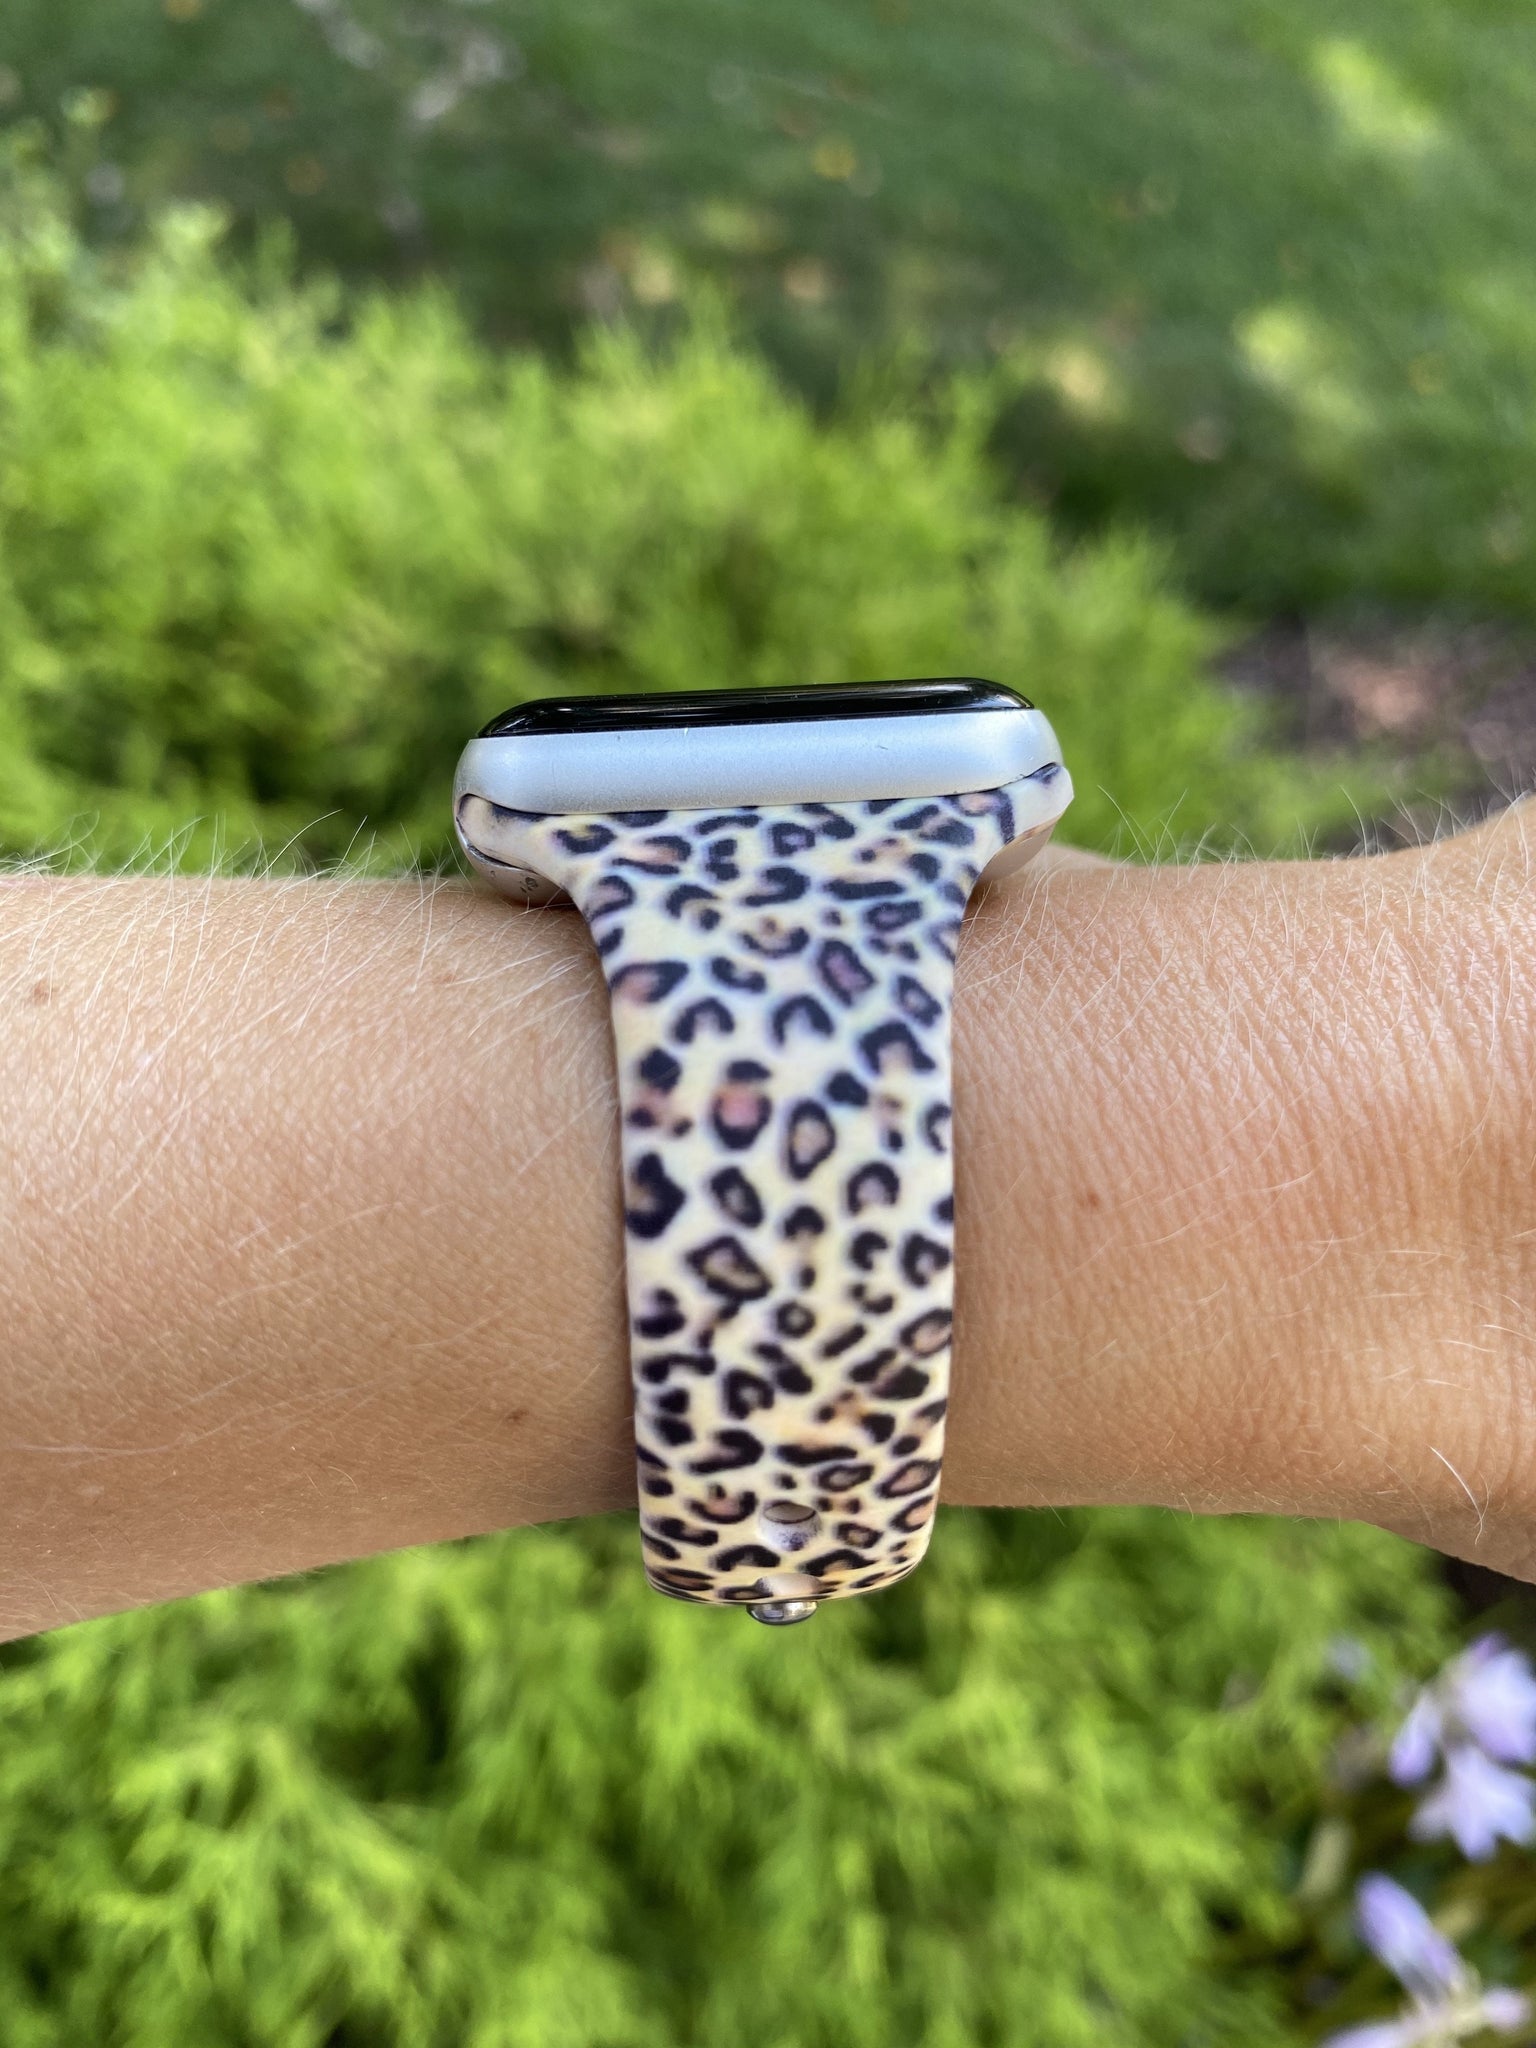 Cheetah Small Print Slim Band for Apple Watch